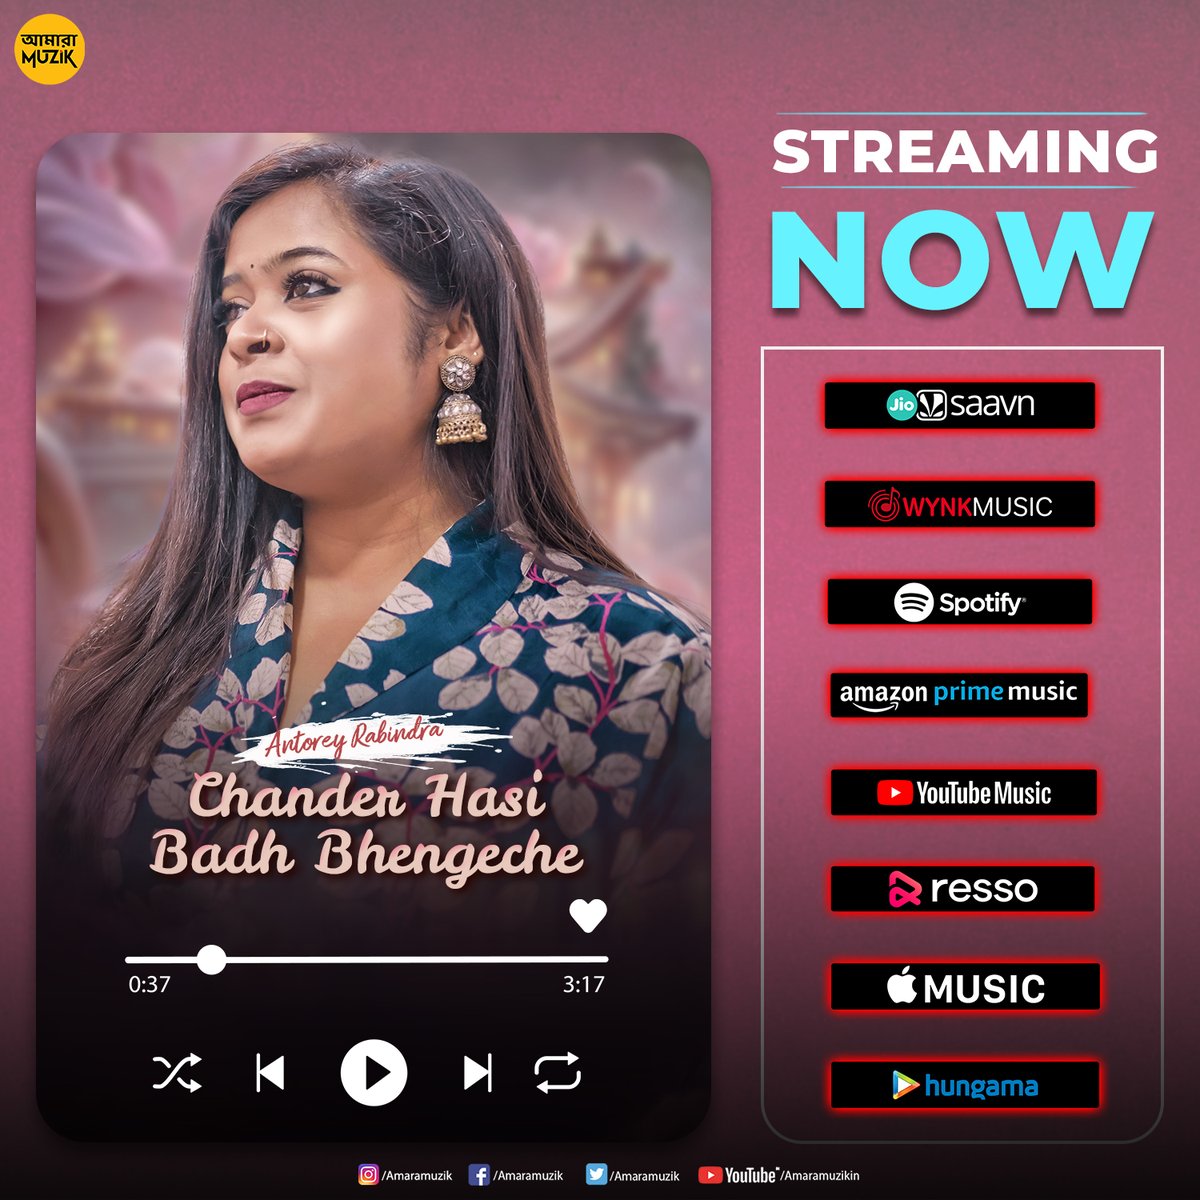 Listen to #ChanderHasiBadhBhengeche Streaming Now on all your favorite Streaming platforms !! 

tinysync.in/9Zxjt8lT8hs 

#ChanderHasiBadhBhengeche #BengaliAlbum #AmaraMuzikBengali #AmaraBengali 
#AmaraMuzik